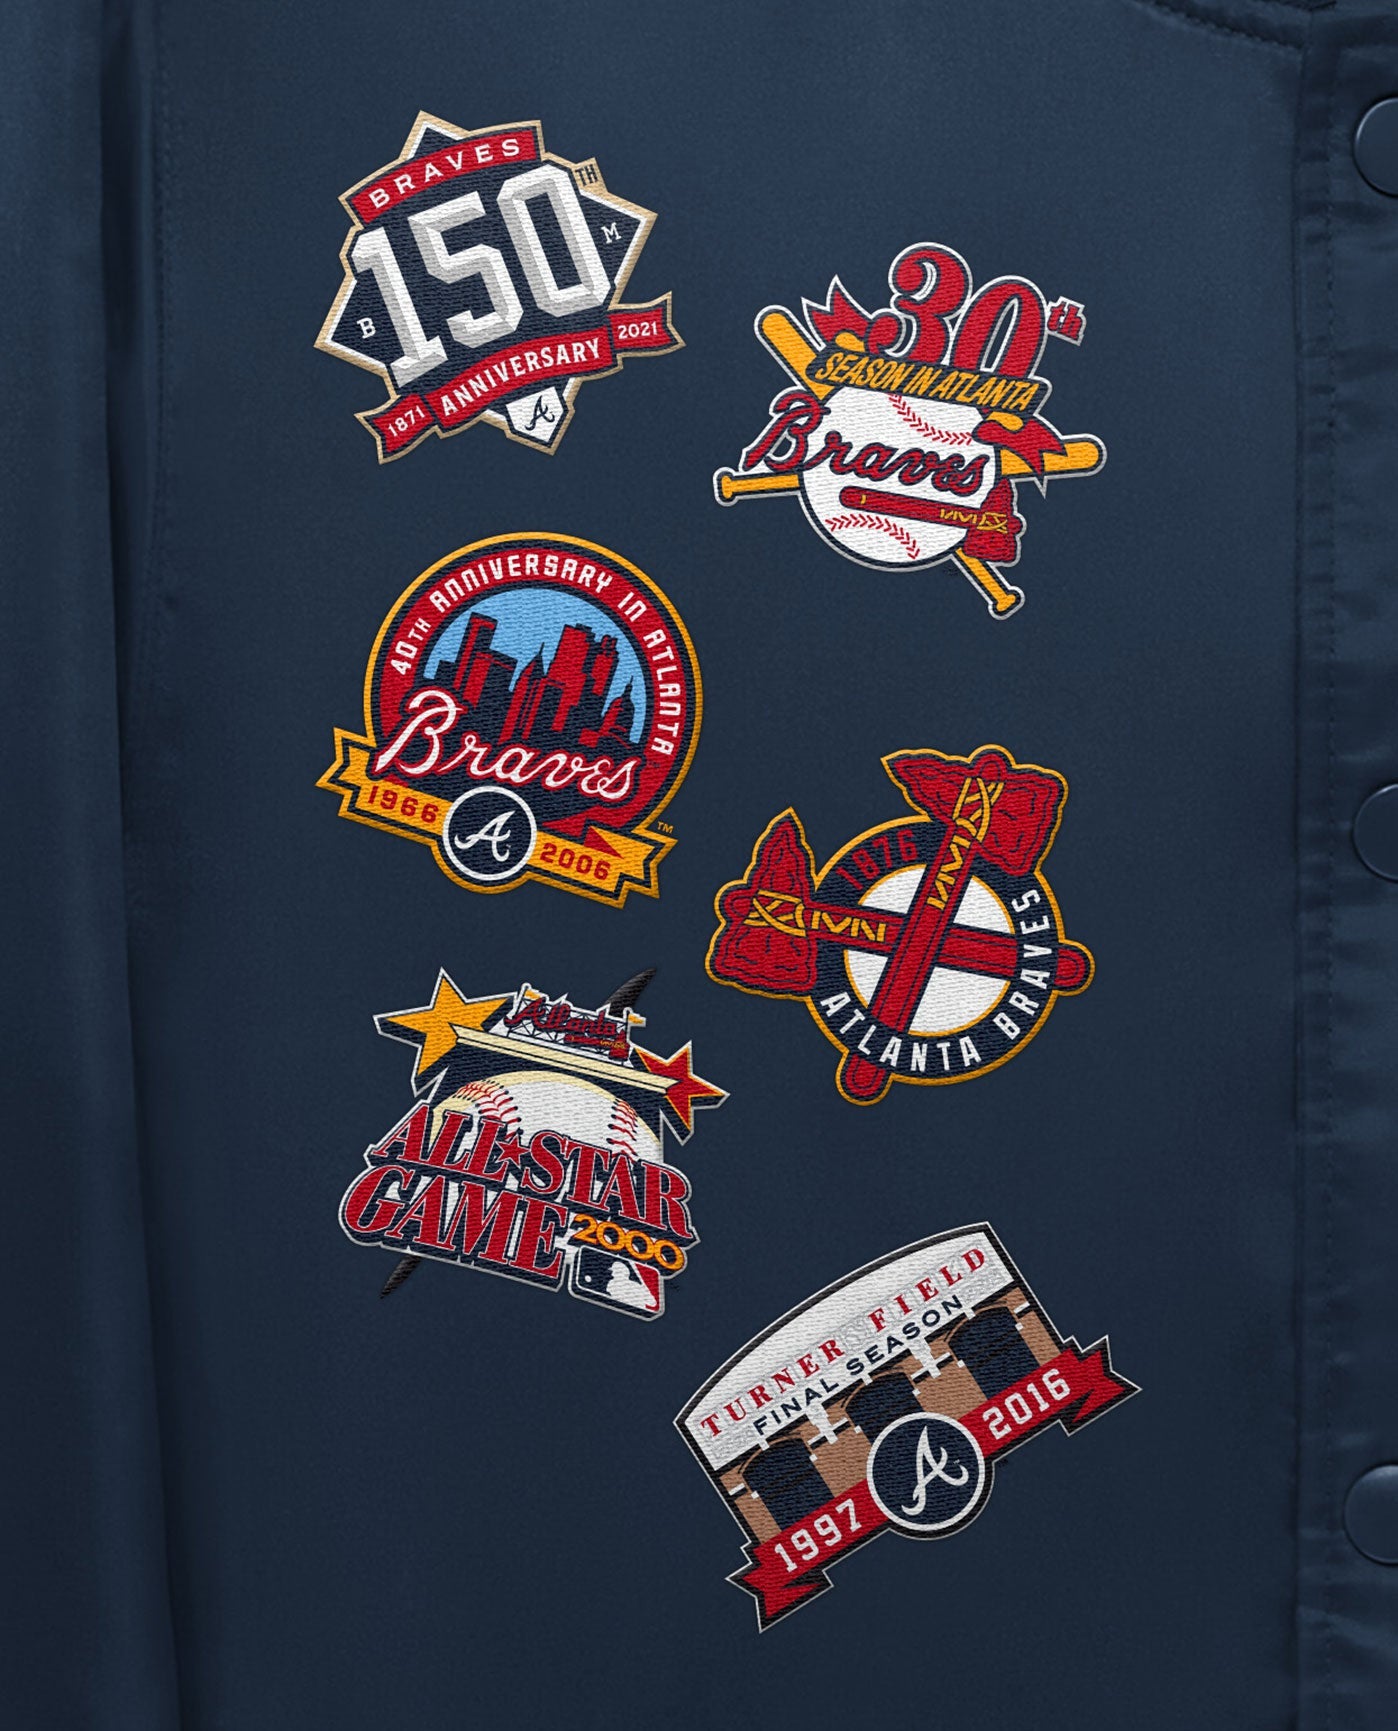 Vintage Atlanta Braves, Starter Stadium Jacket. MED. FREE POSTAGE